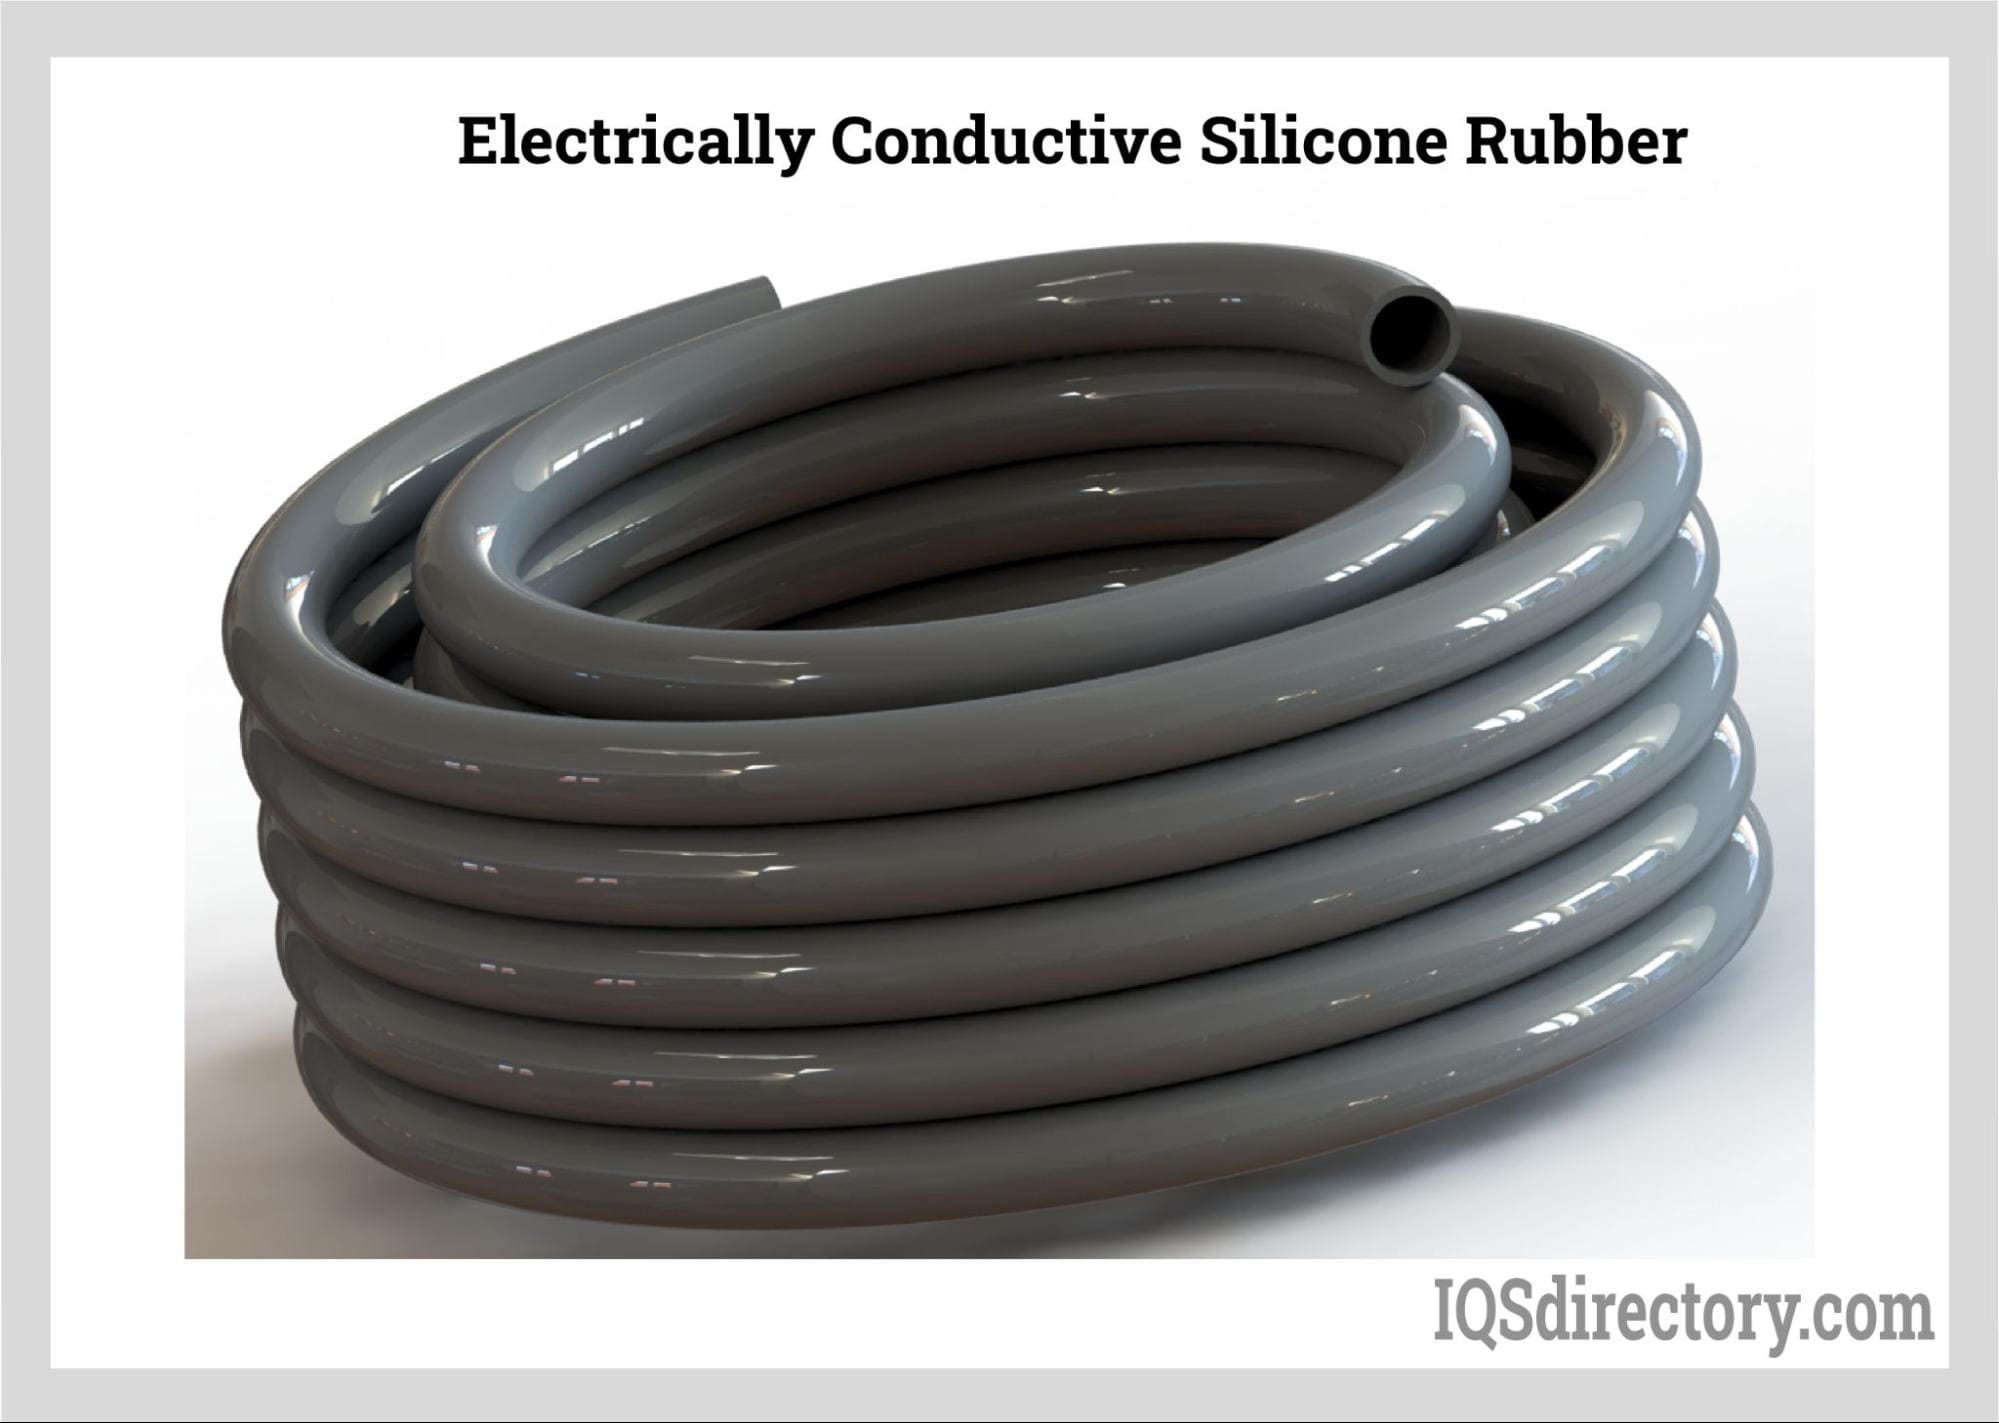 Electrically Conductive Silicone Rubber